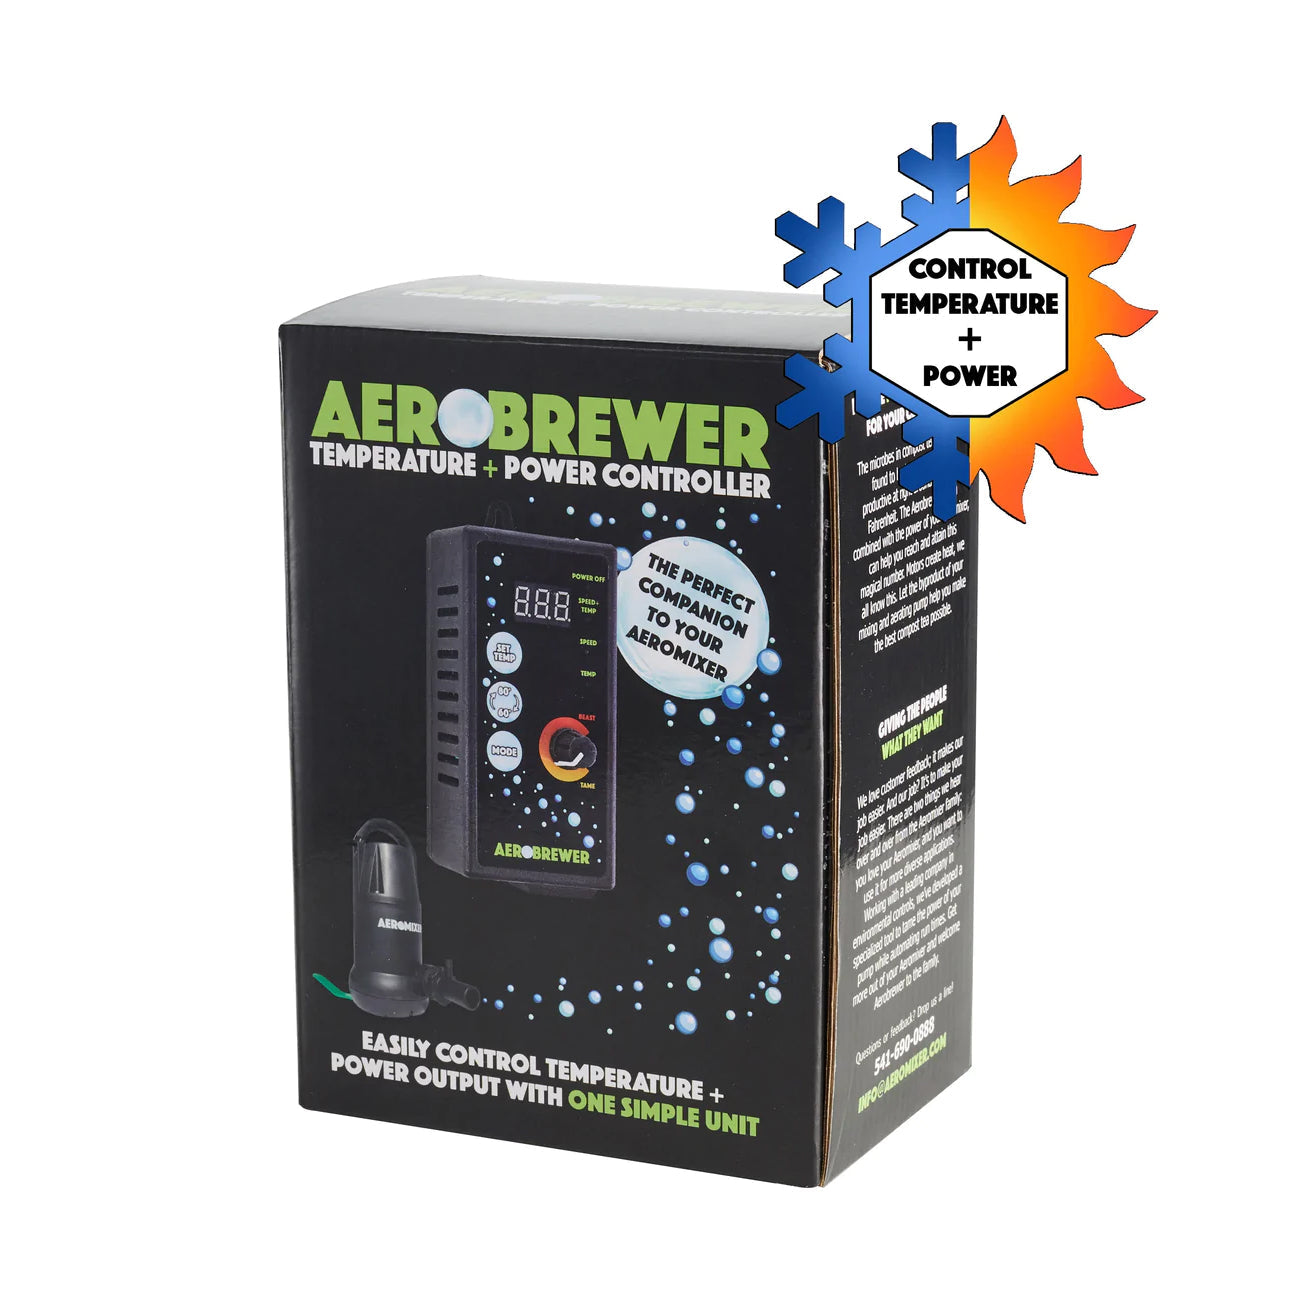 Aerobrewer: Temperature + Power Controller